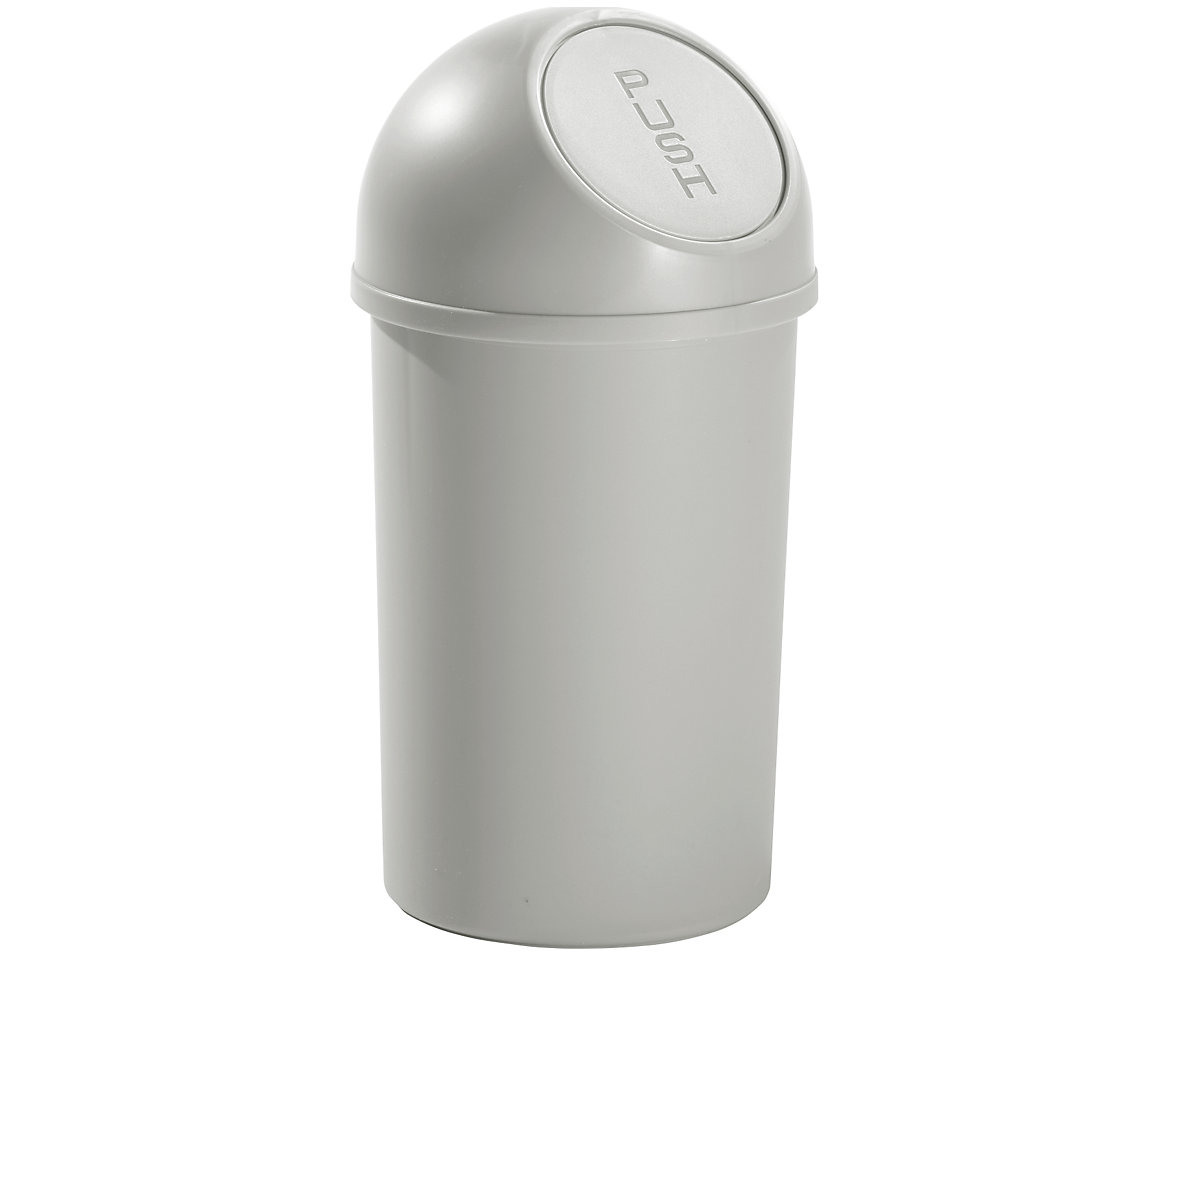 Mobiler Abfallbehälter Design [BIN THERE] – Hochwertige Büromöbel